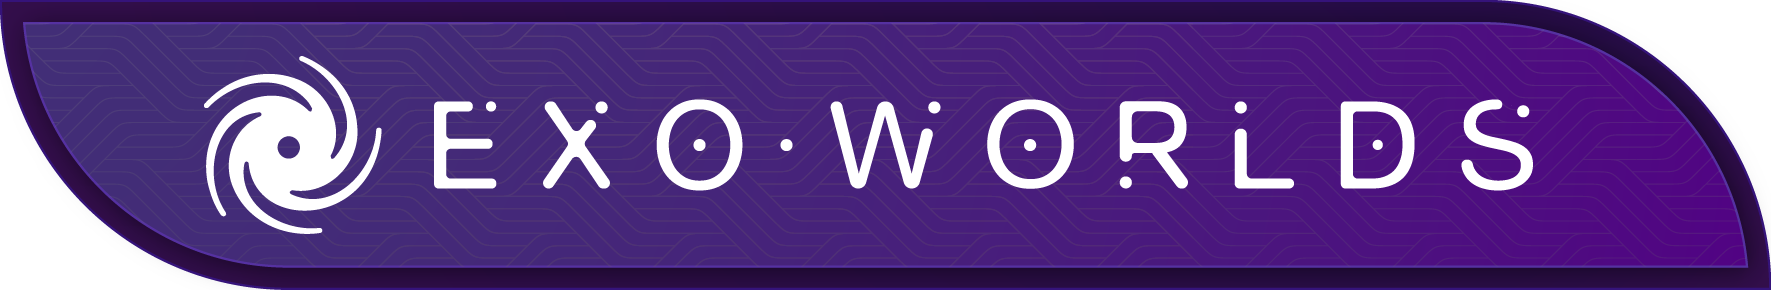 exoWorldlogo logo